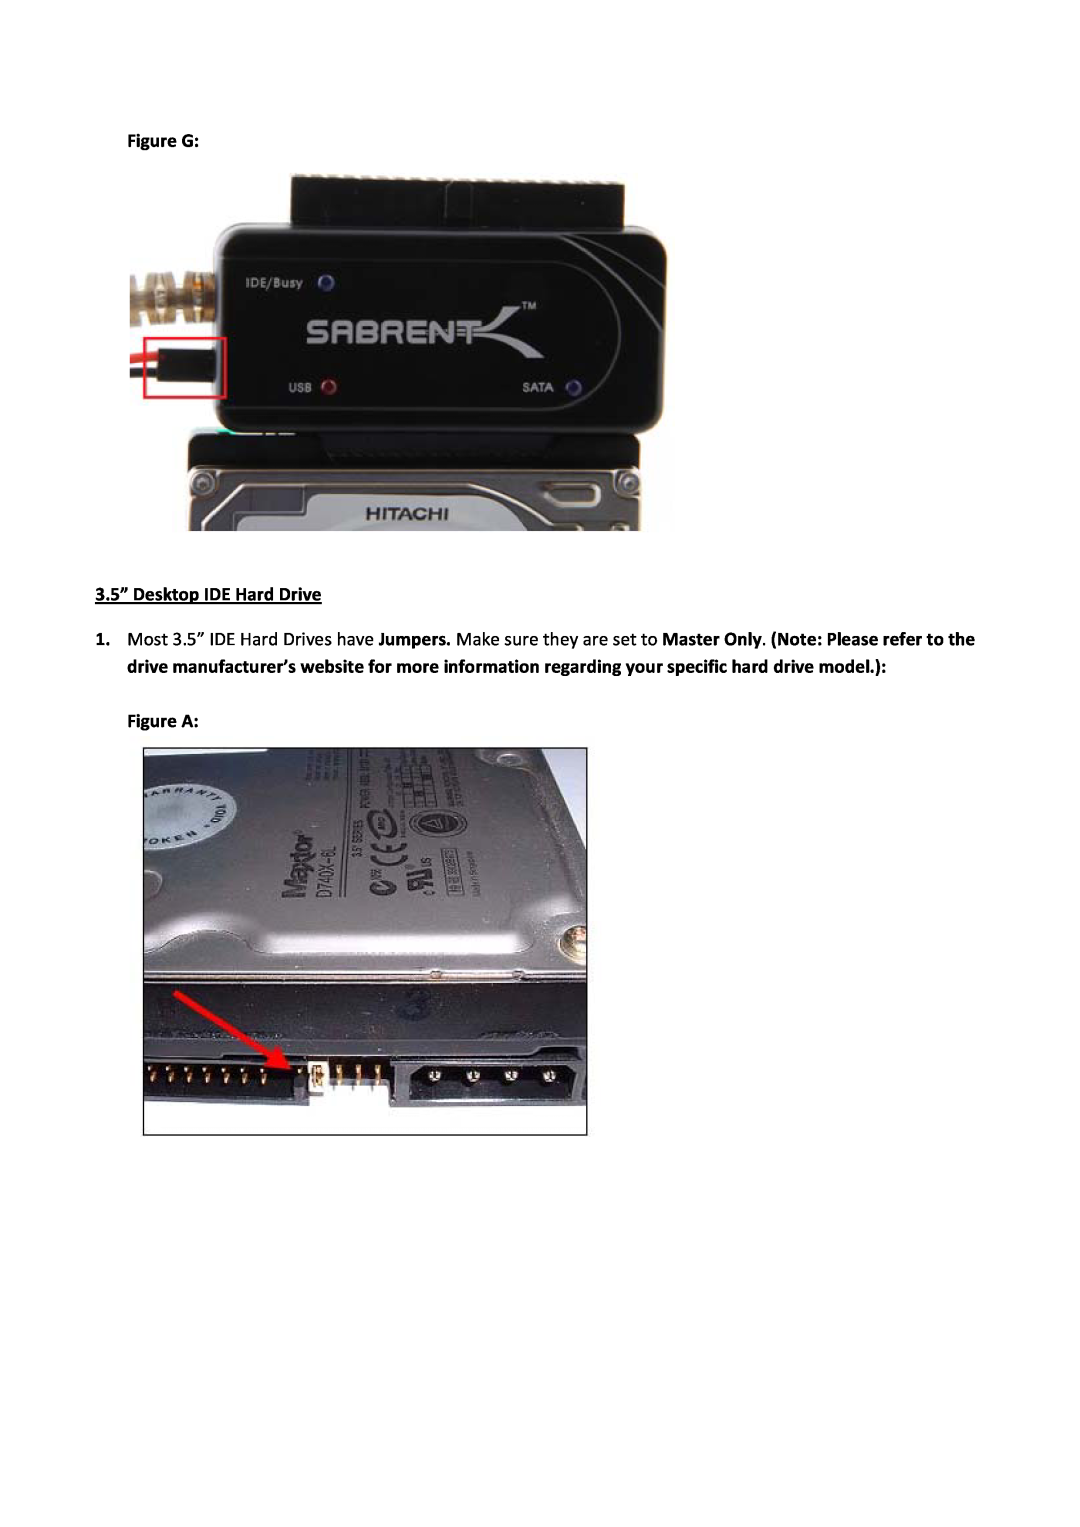 Sabrent USBDSC5 manual Figure G 3.5” Desktop IDE Hard Drive, Figure A 